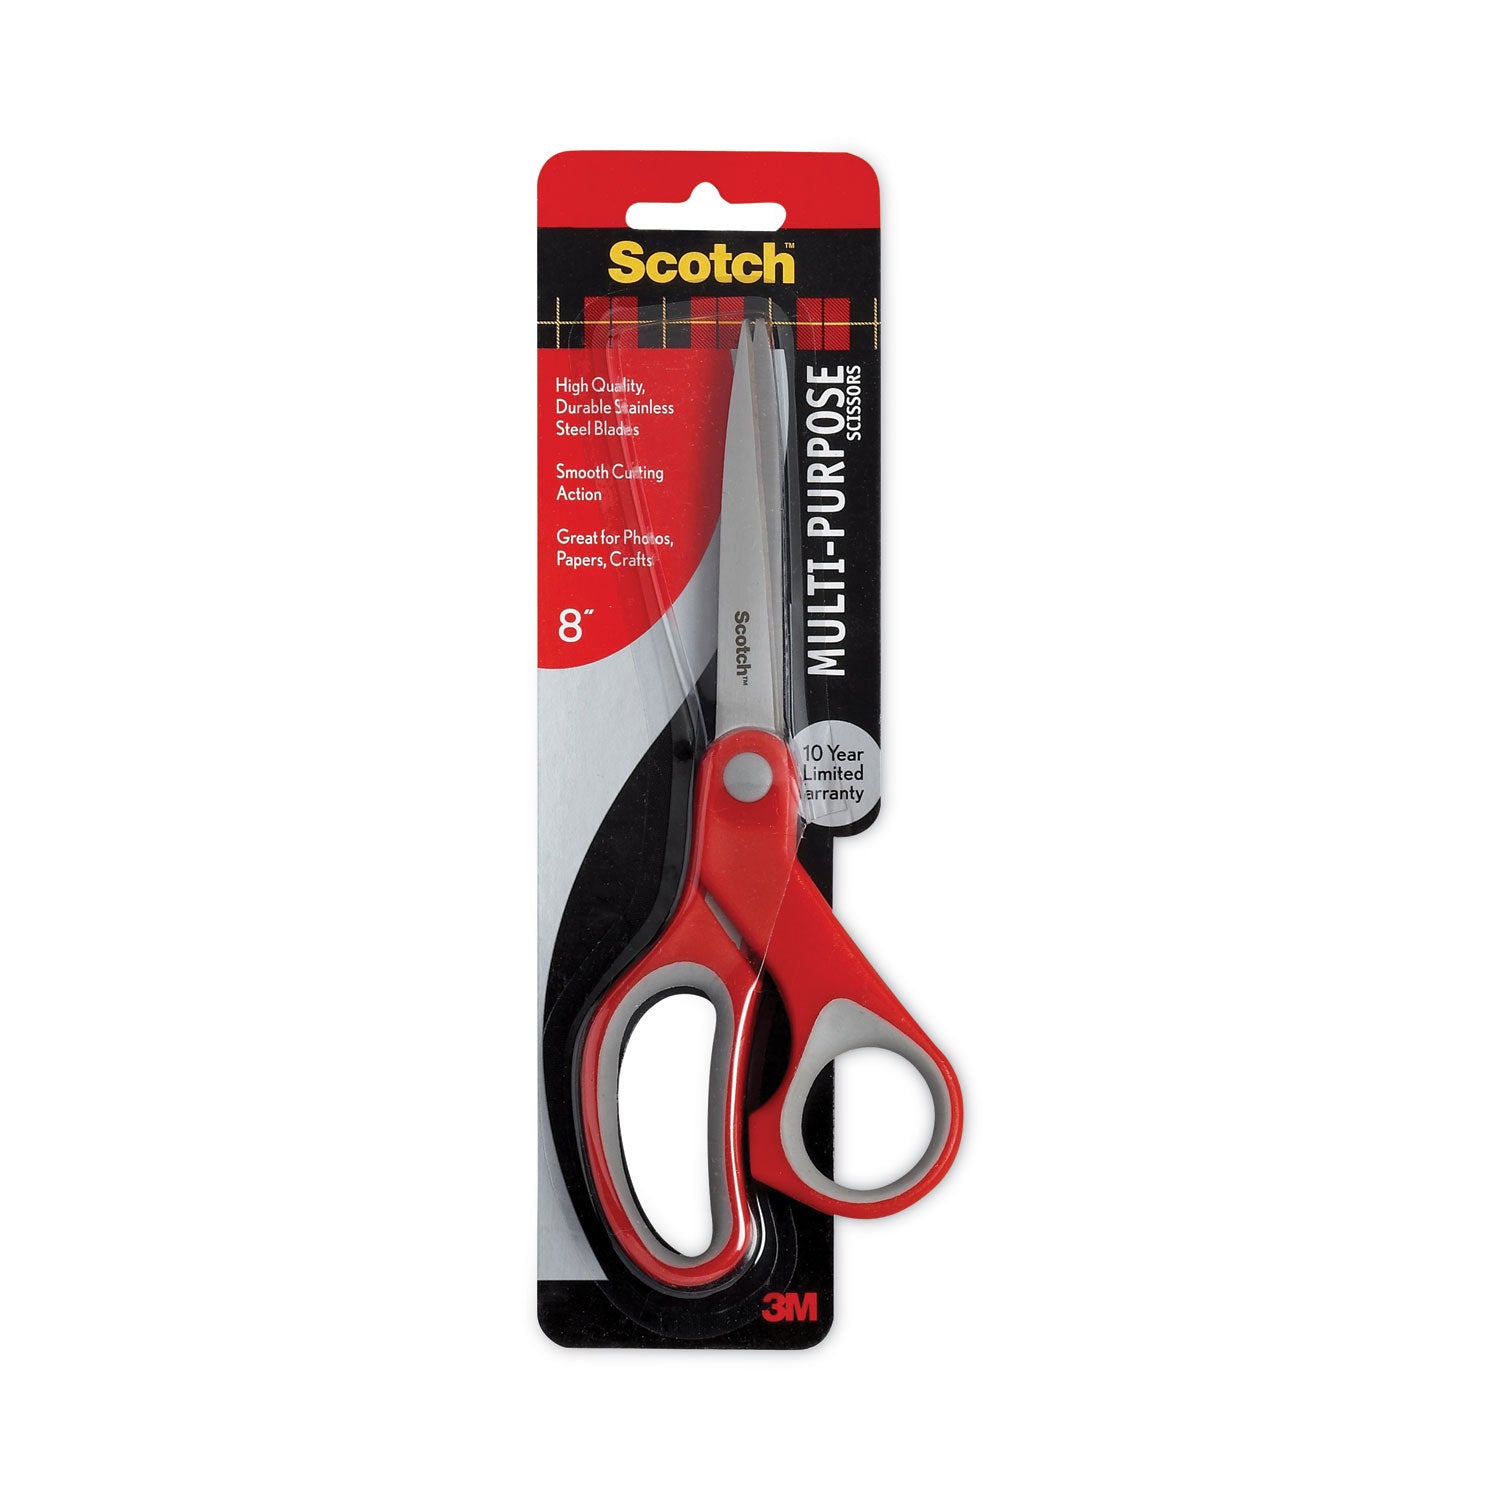 Multi-Purpose Scissors, 8" Long, 3.38" Cut Length, Gray/Red Straight Handle - 